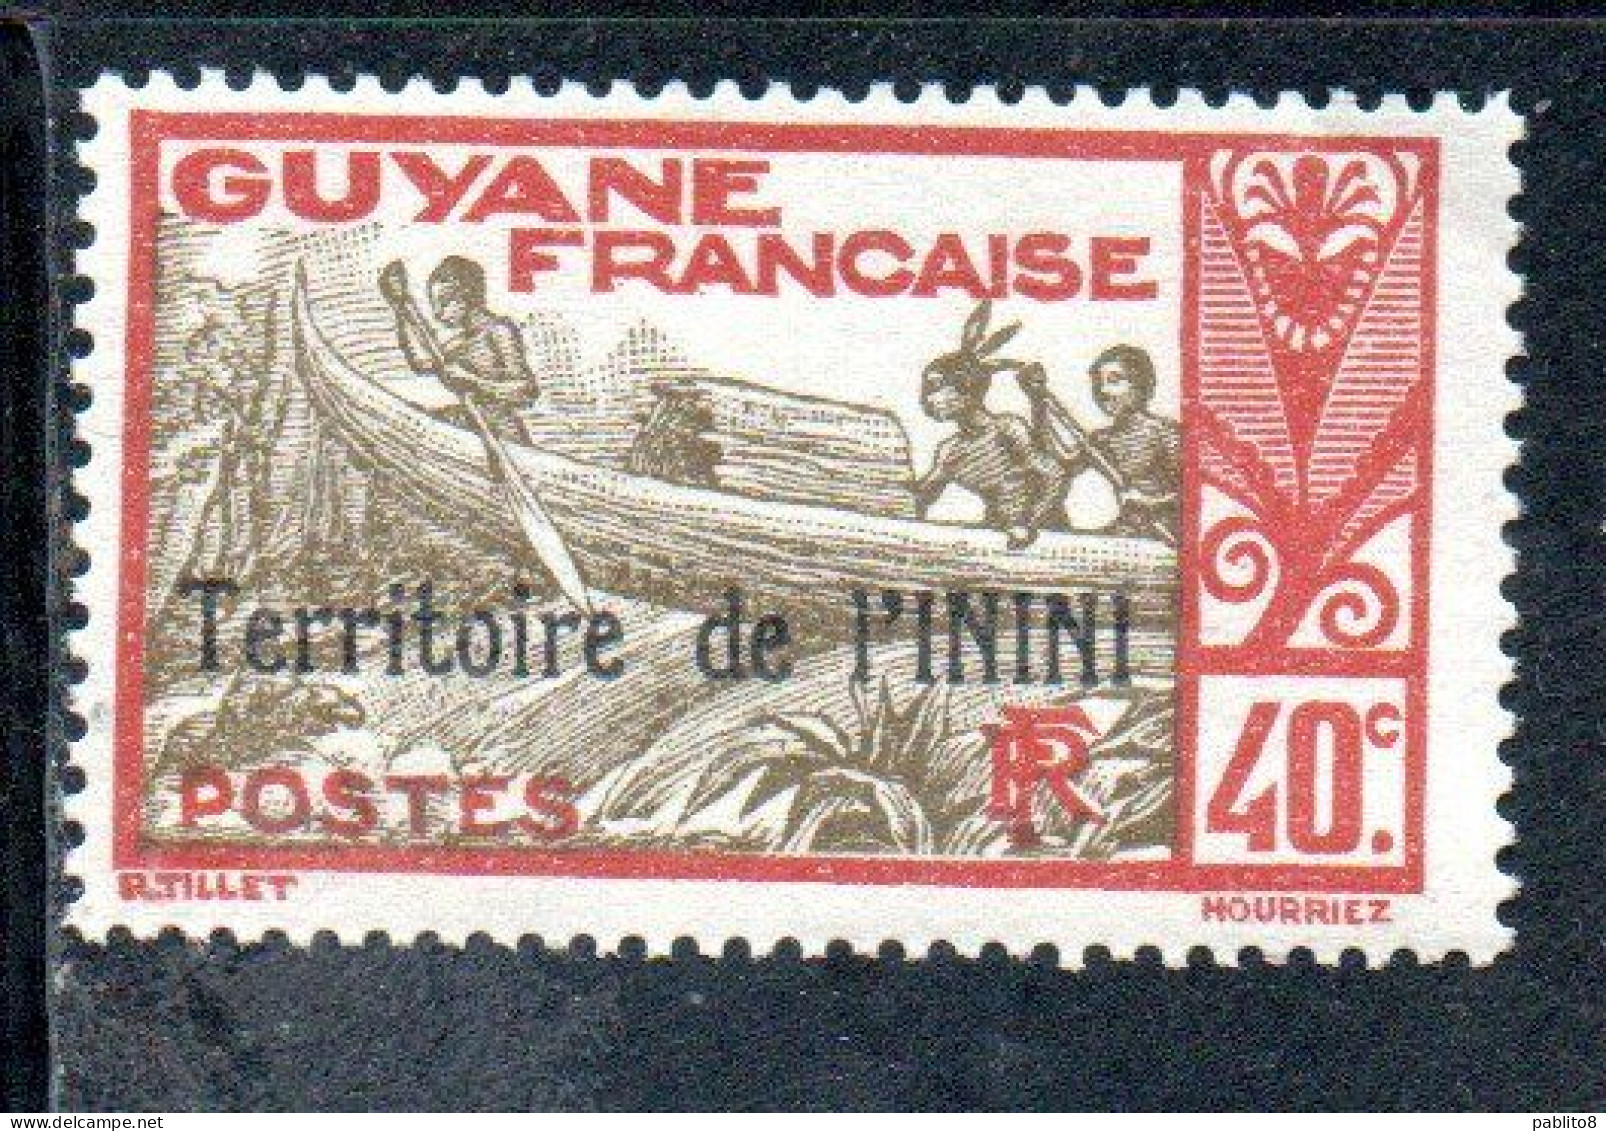 GUYANE FRANCAISE TERRITOIRE DE L'ININI OVERPRINTED SURCHARGE 1932 1940 SHOOTING RAPIDS MARONI RIVER 40c MNH - Nuovi